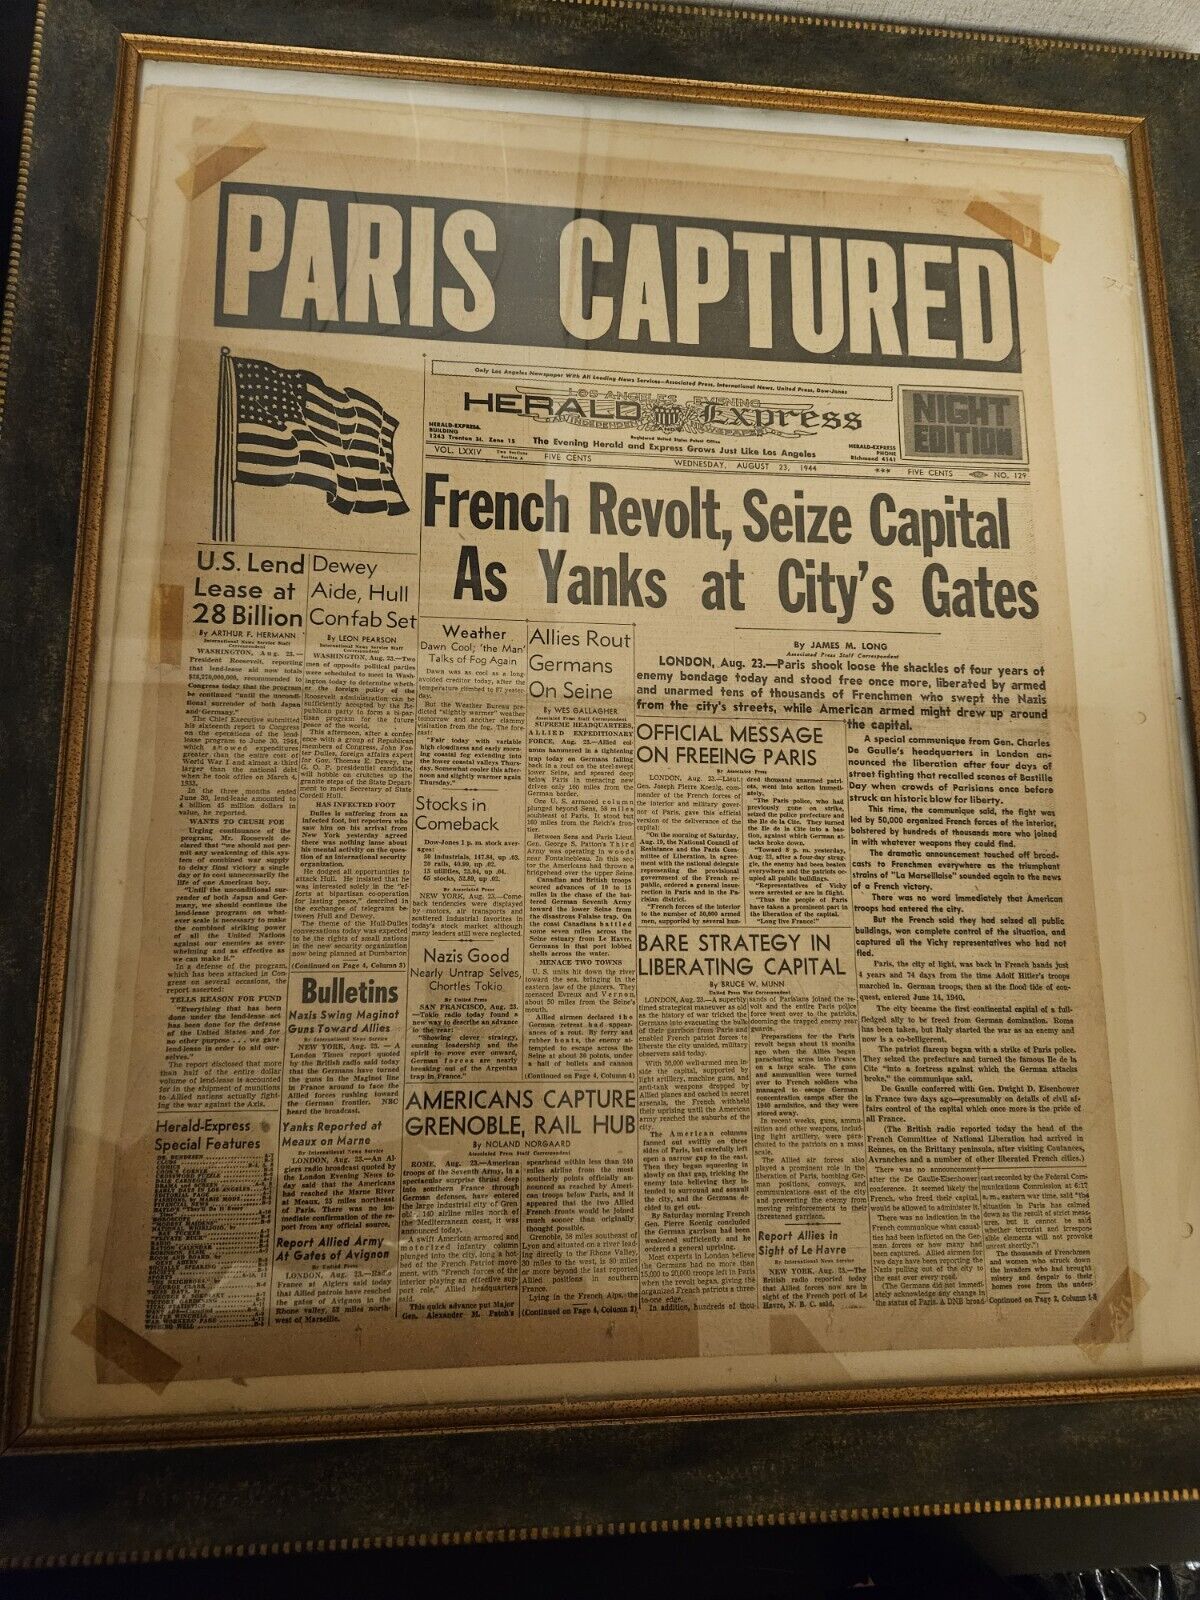 WW2 PARIS CAPTURED News Article 1944 Nazi Occupied Paris 100% Authentic